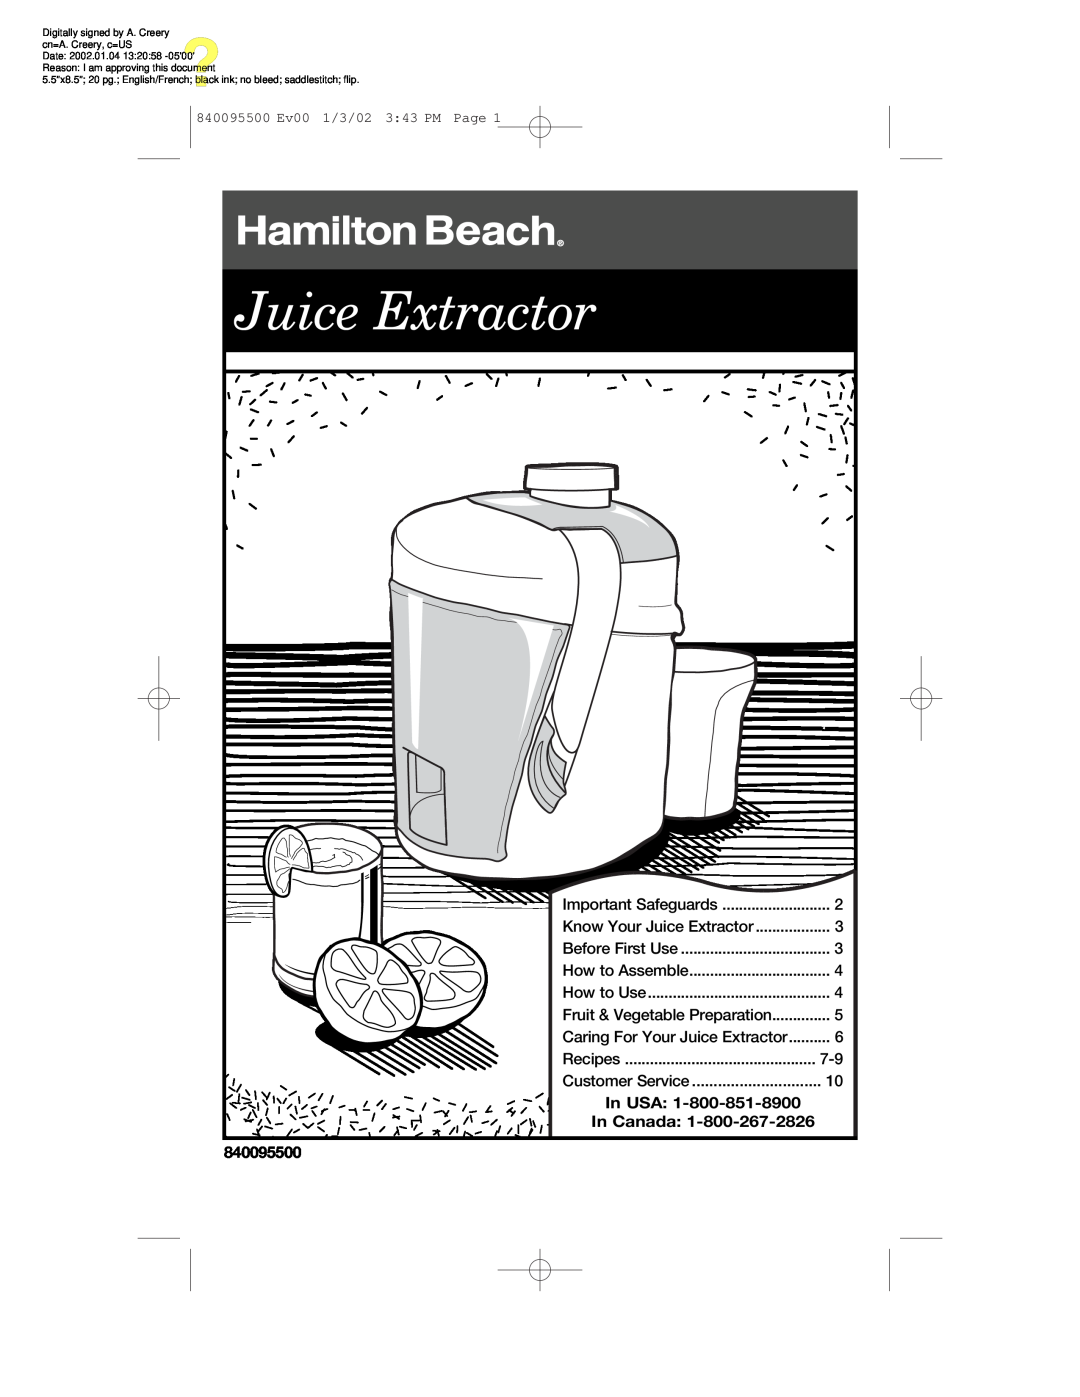 Hamilton Beach 840095500 manual Juice Extractor, In USA In Canada 